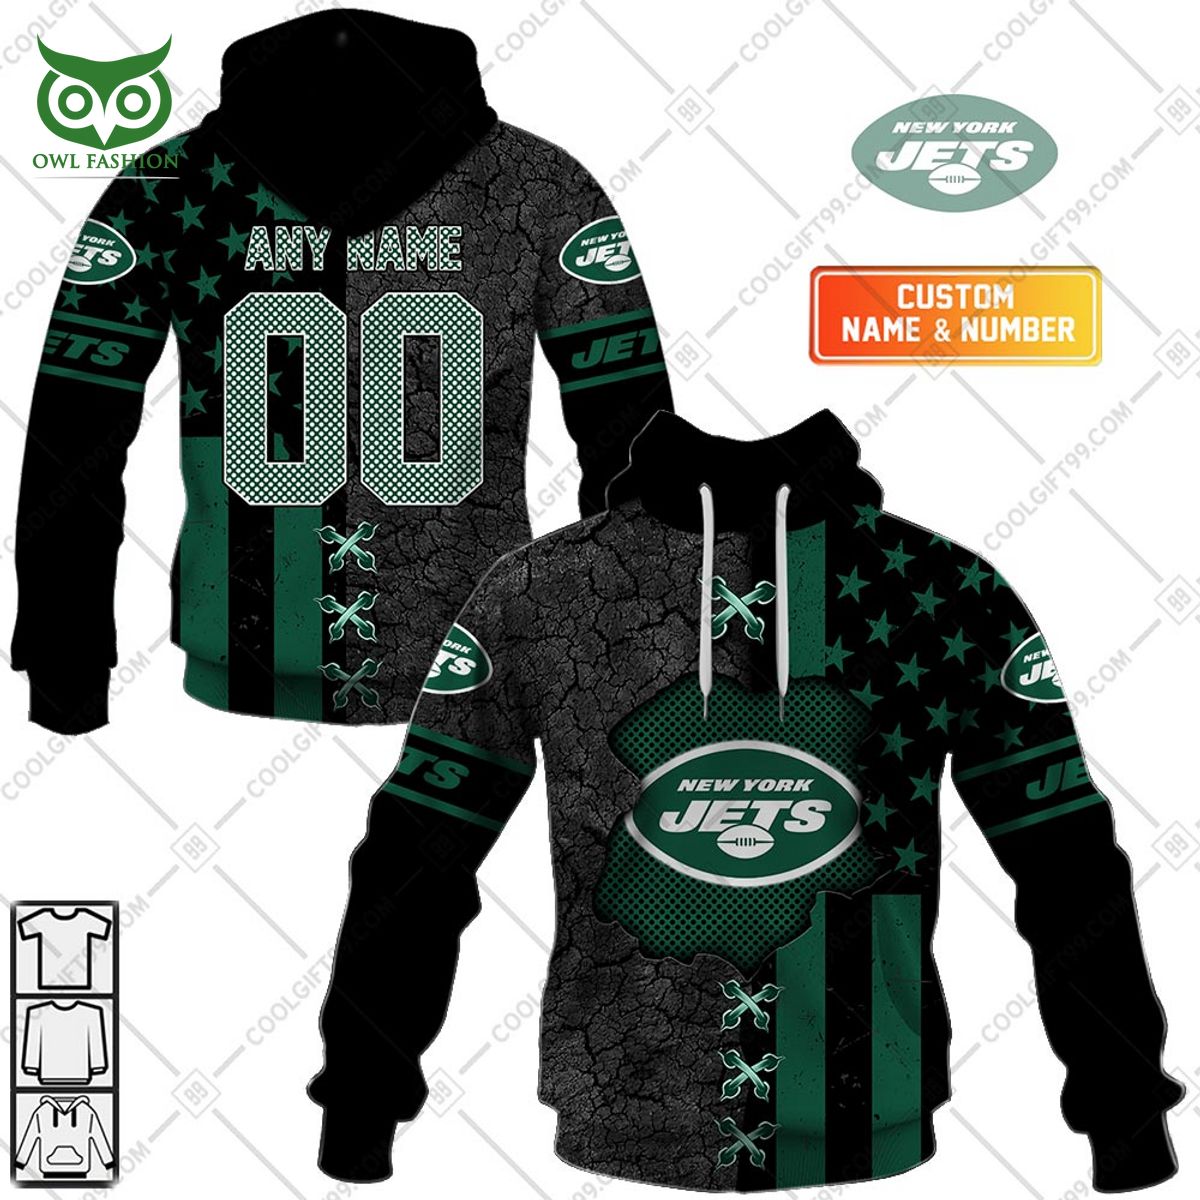 NFL New York Jets USA flag custom hoodie shirt printed